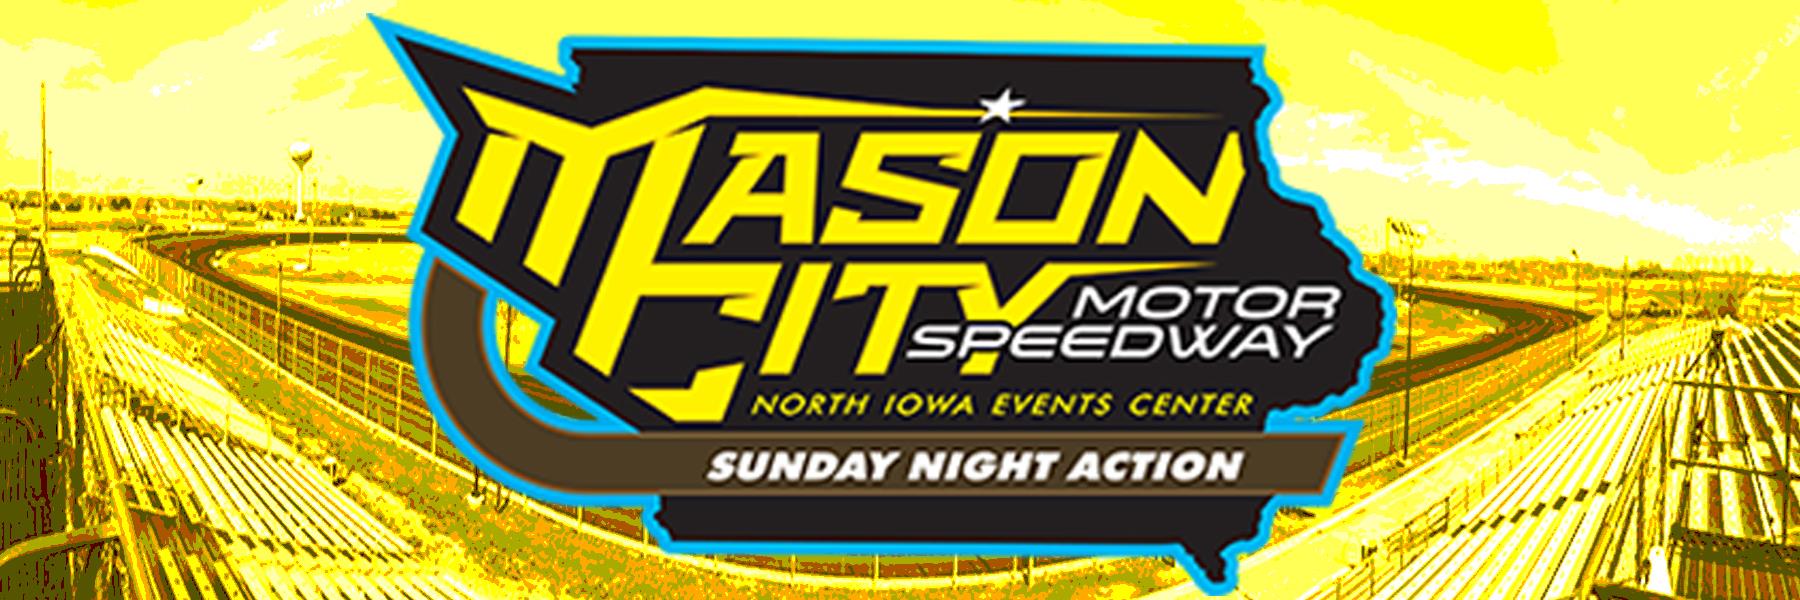 6/13/2021 - Mason City Motor Speedway